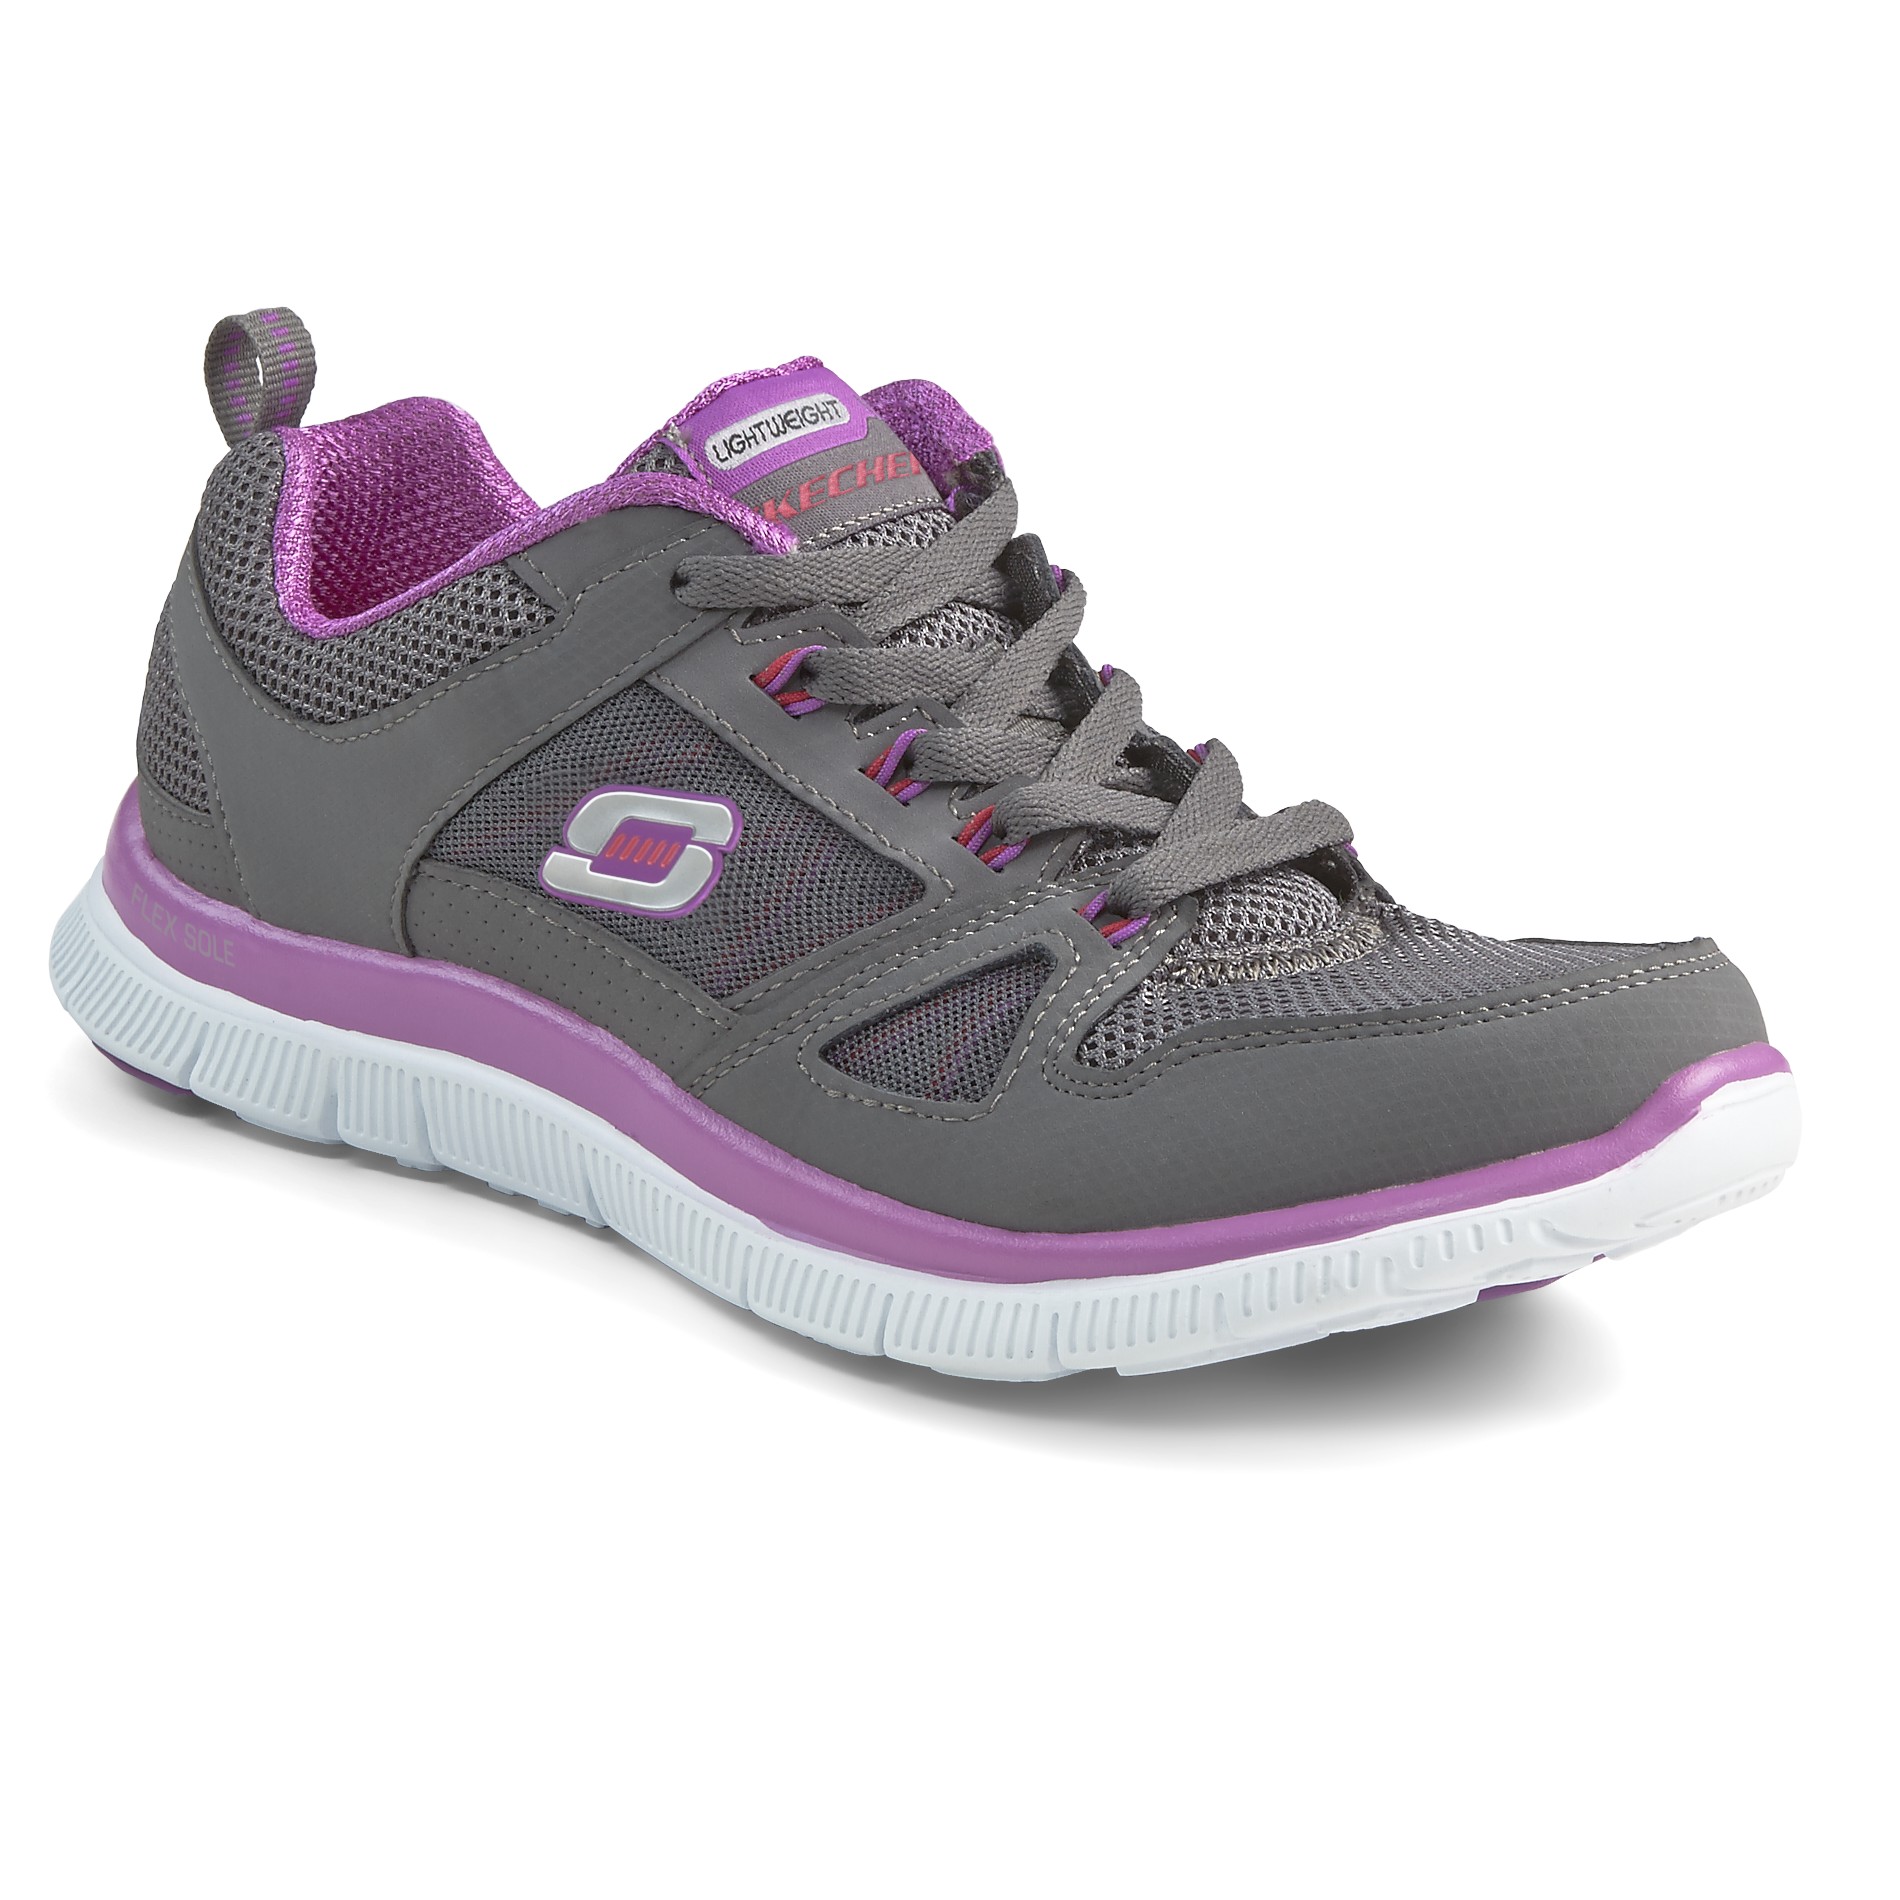 Skechers Women's Spring Fever Running Athletic Shoe - Grey/Purple Wide Width